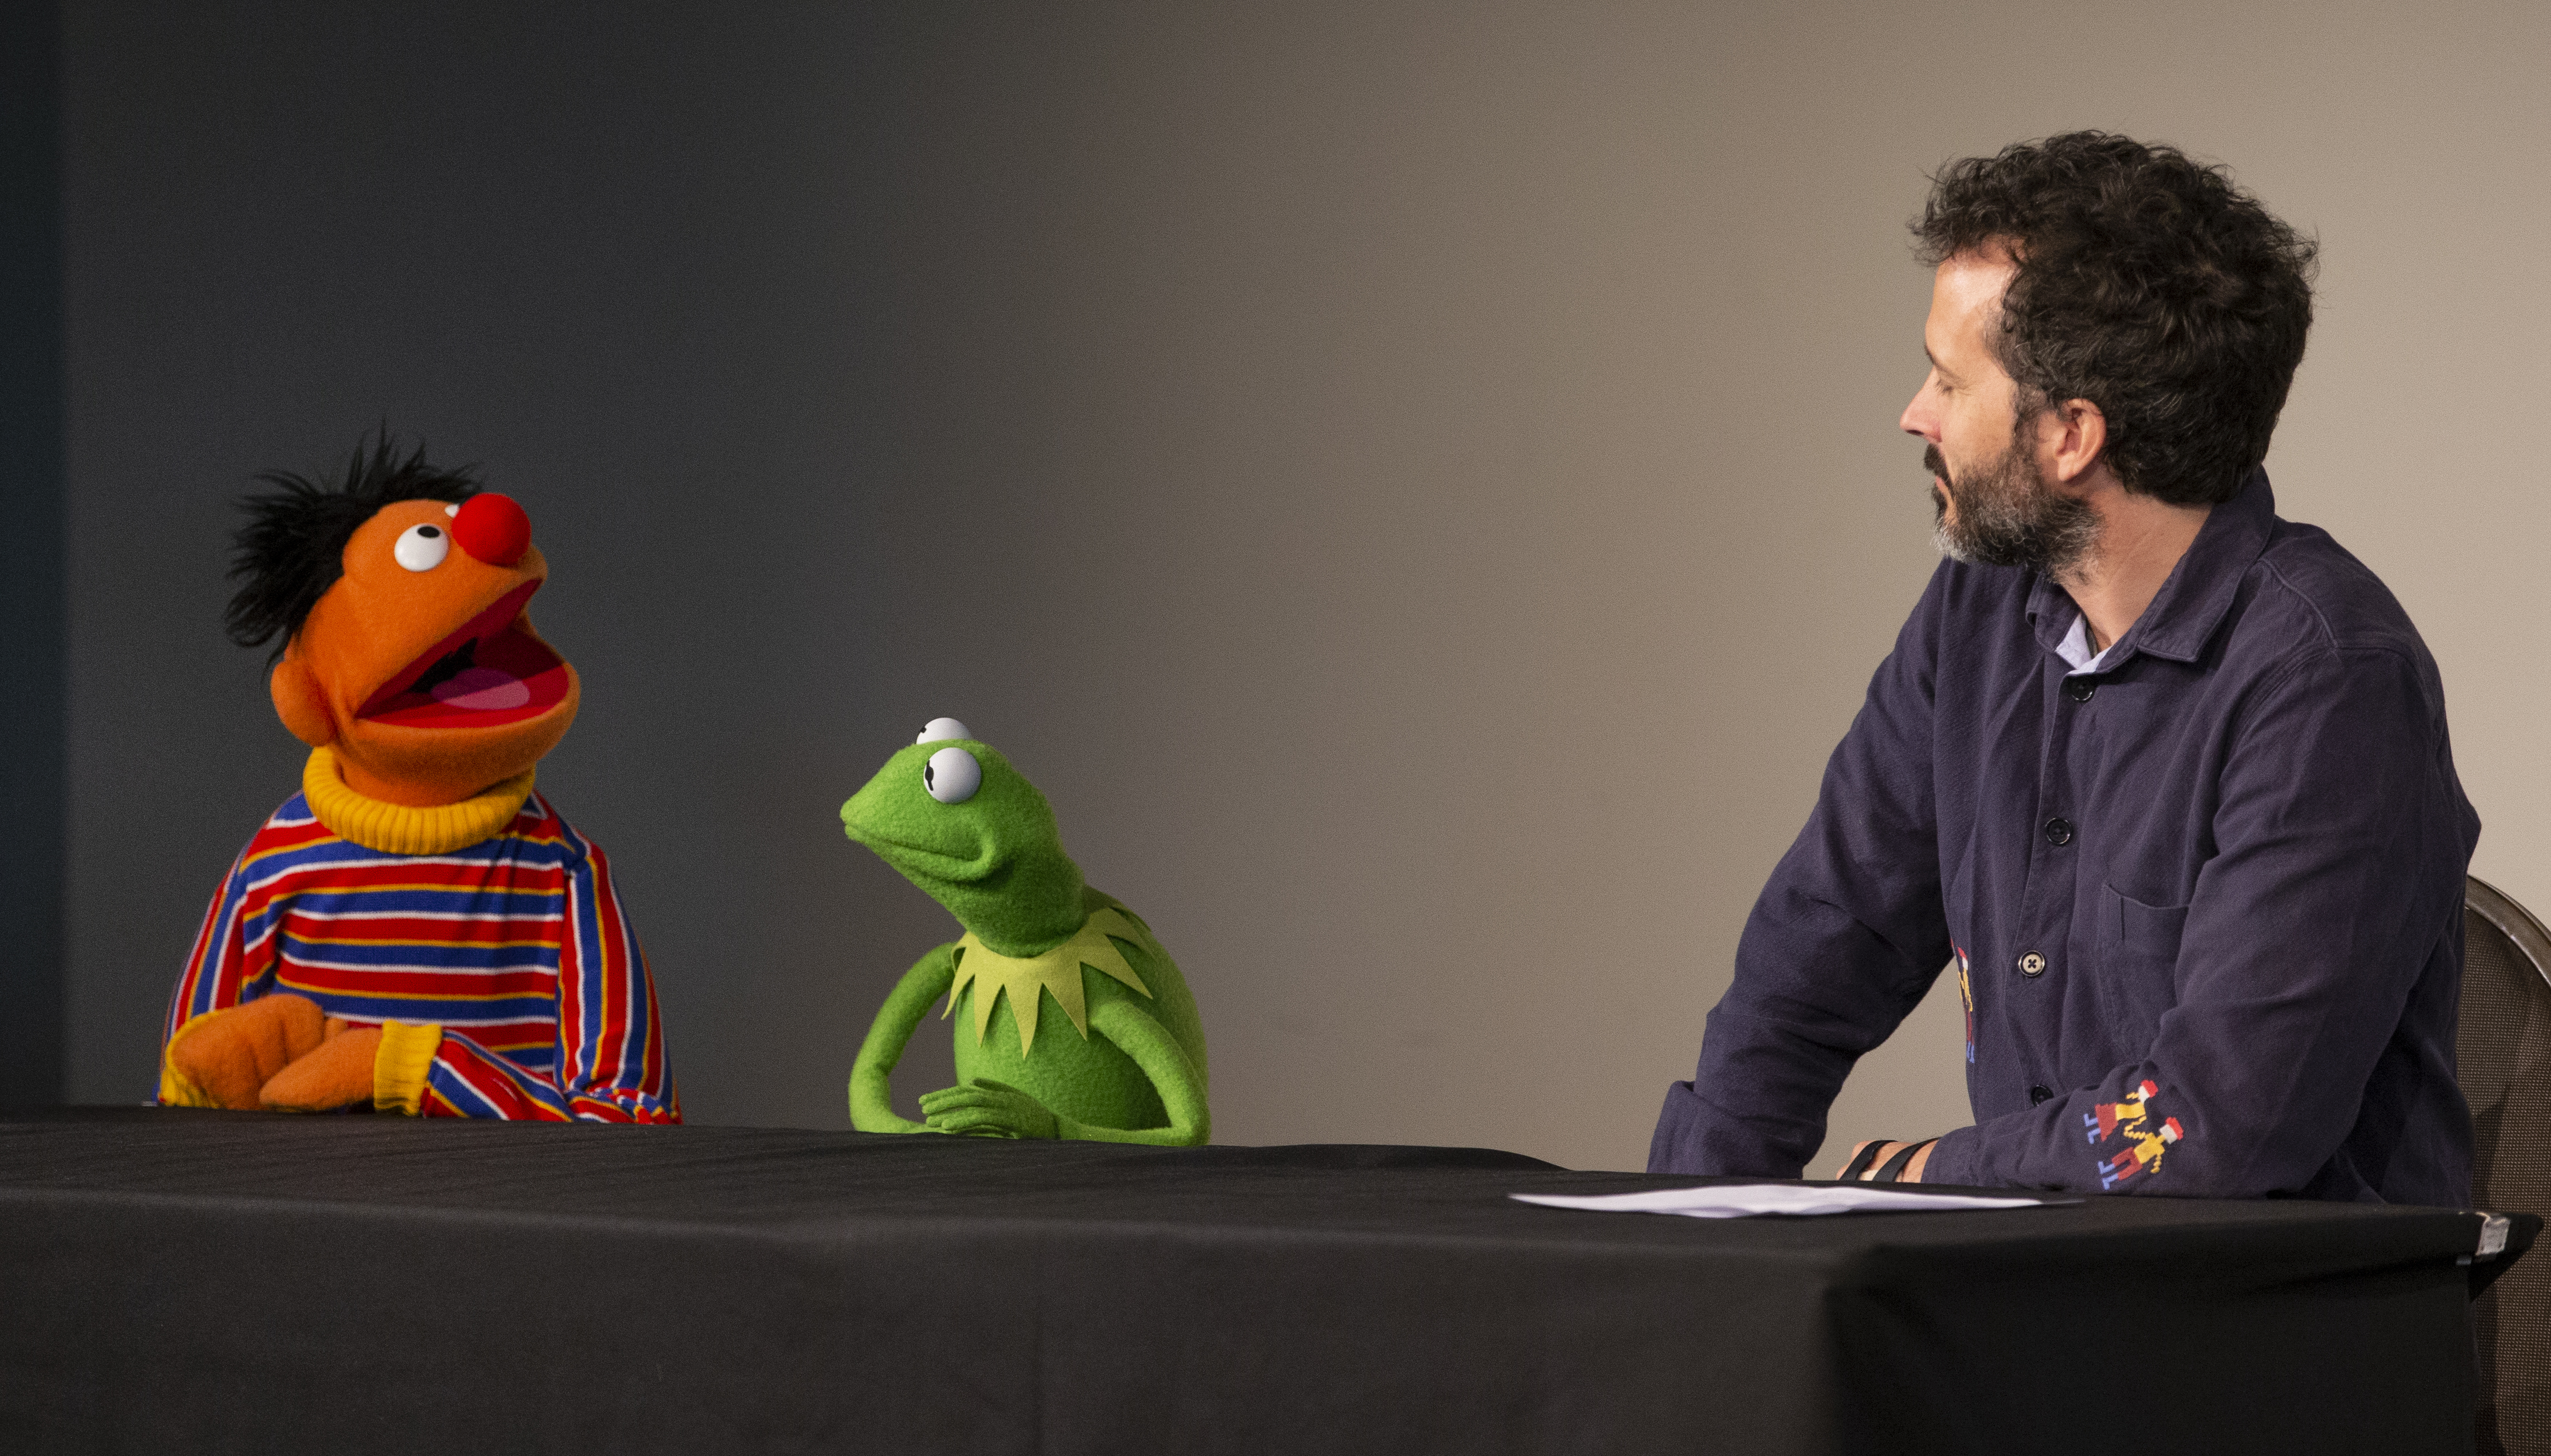 Miss Piggy Dishes on Muppets Movie, Kermit, Ernie and Bert Rumors